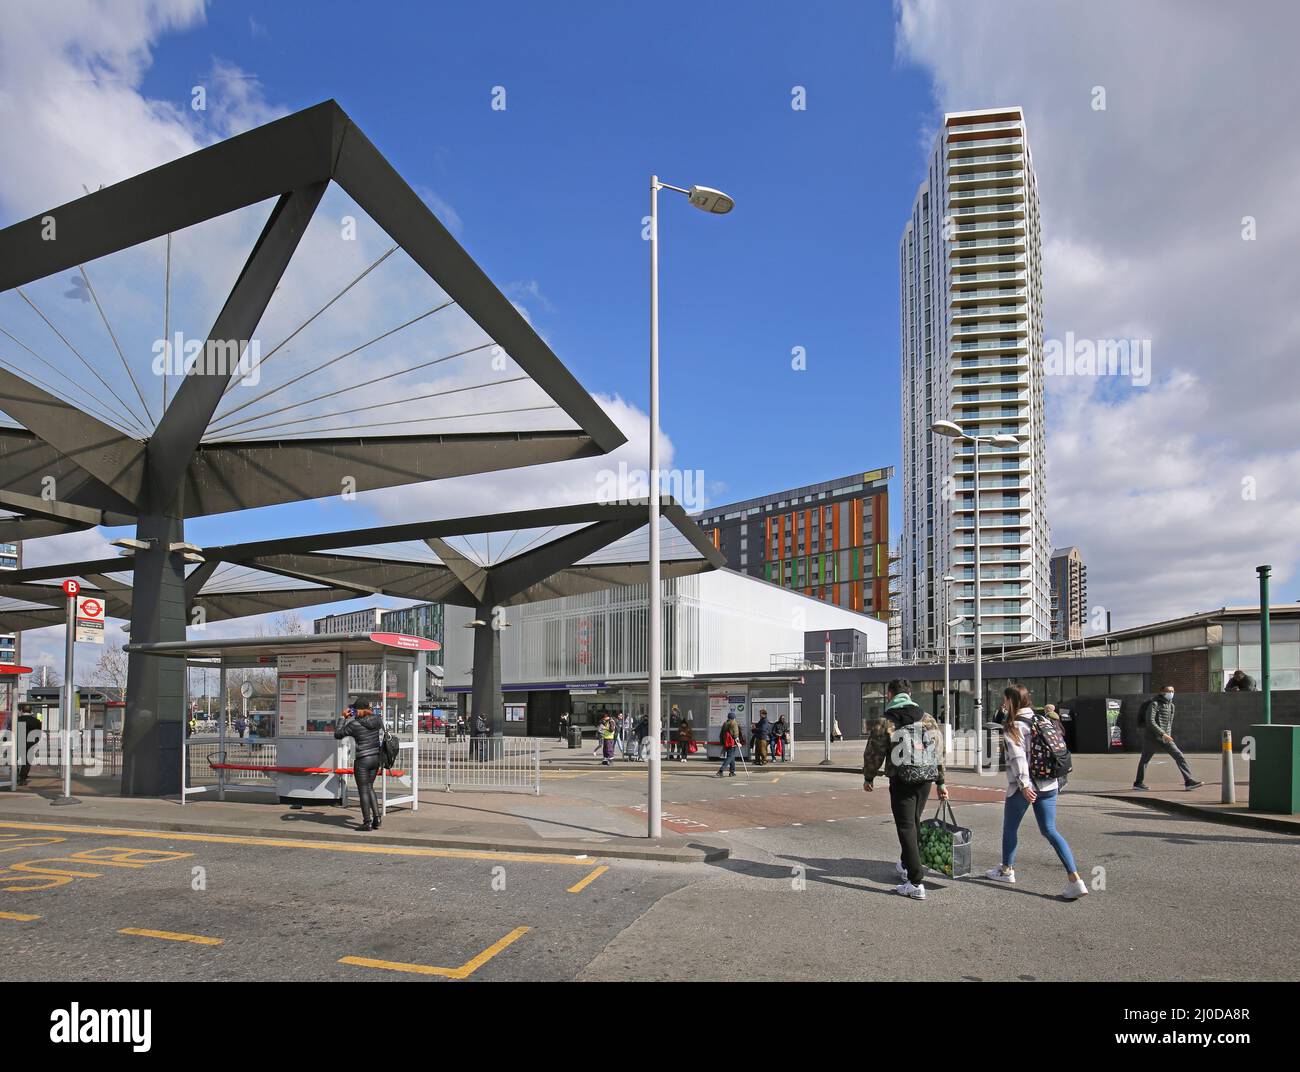 The newly refurbished railway/underground station and bus interchange  at Tottenham Hale, north London, UK. Stock Photo